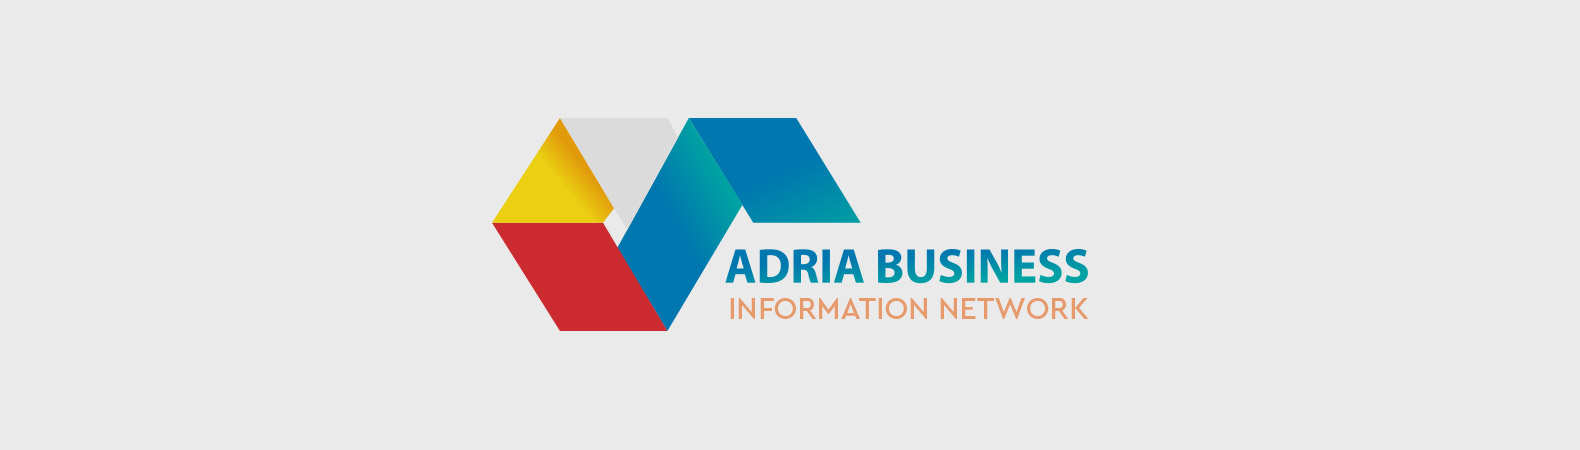 Adria Business Information Network